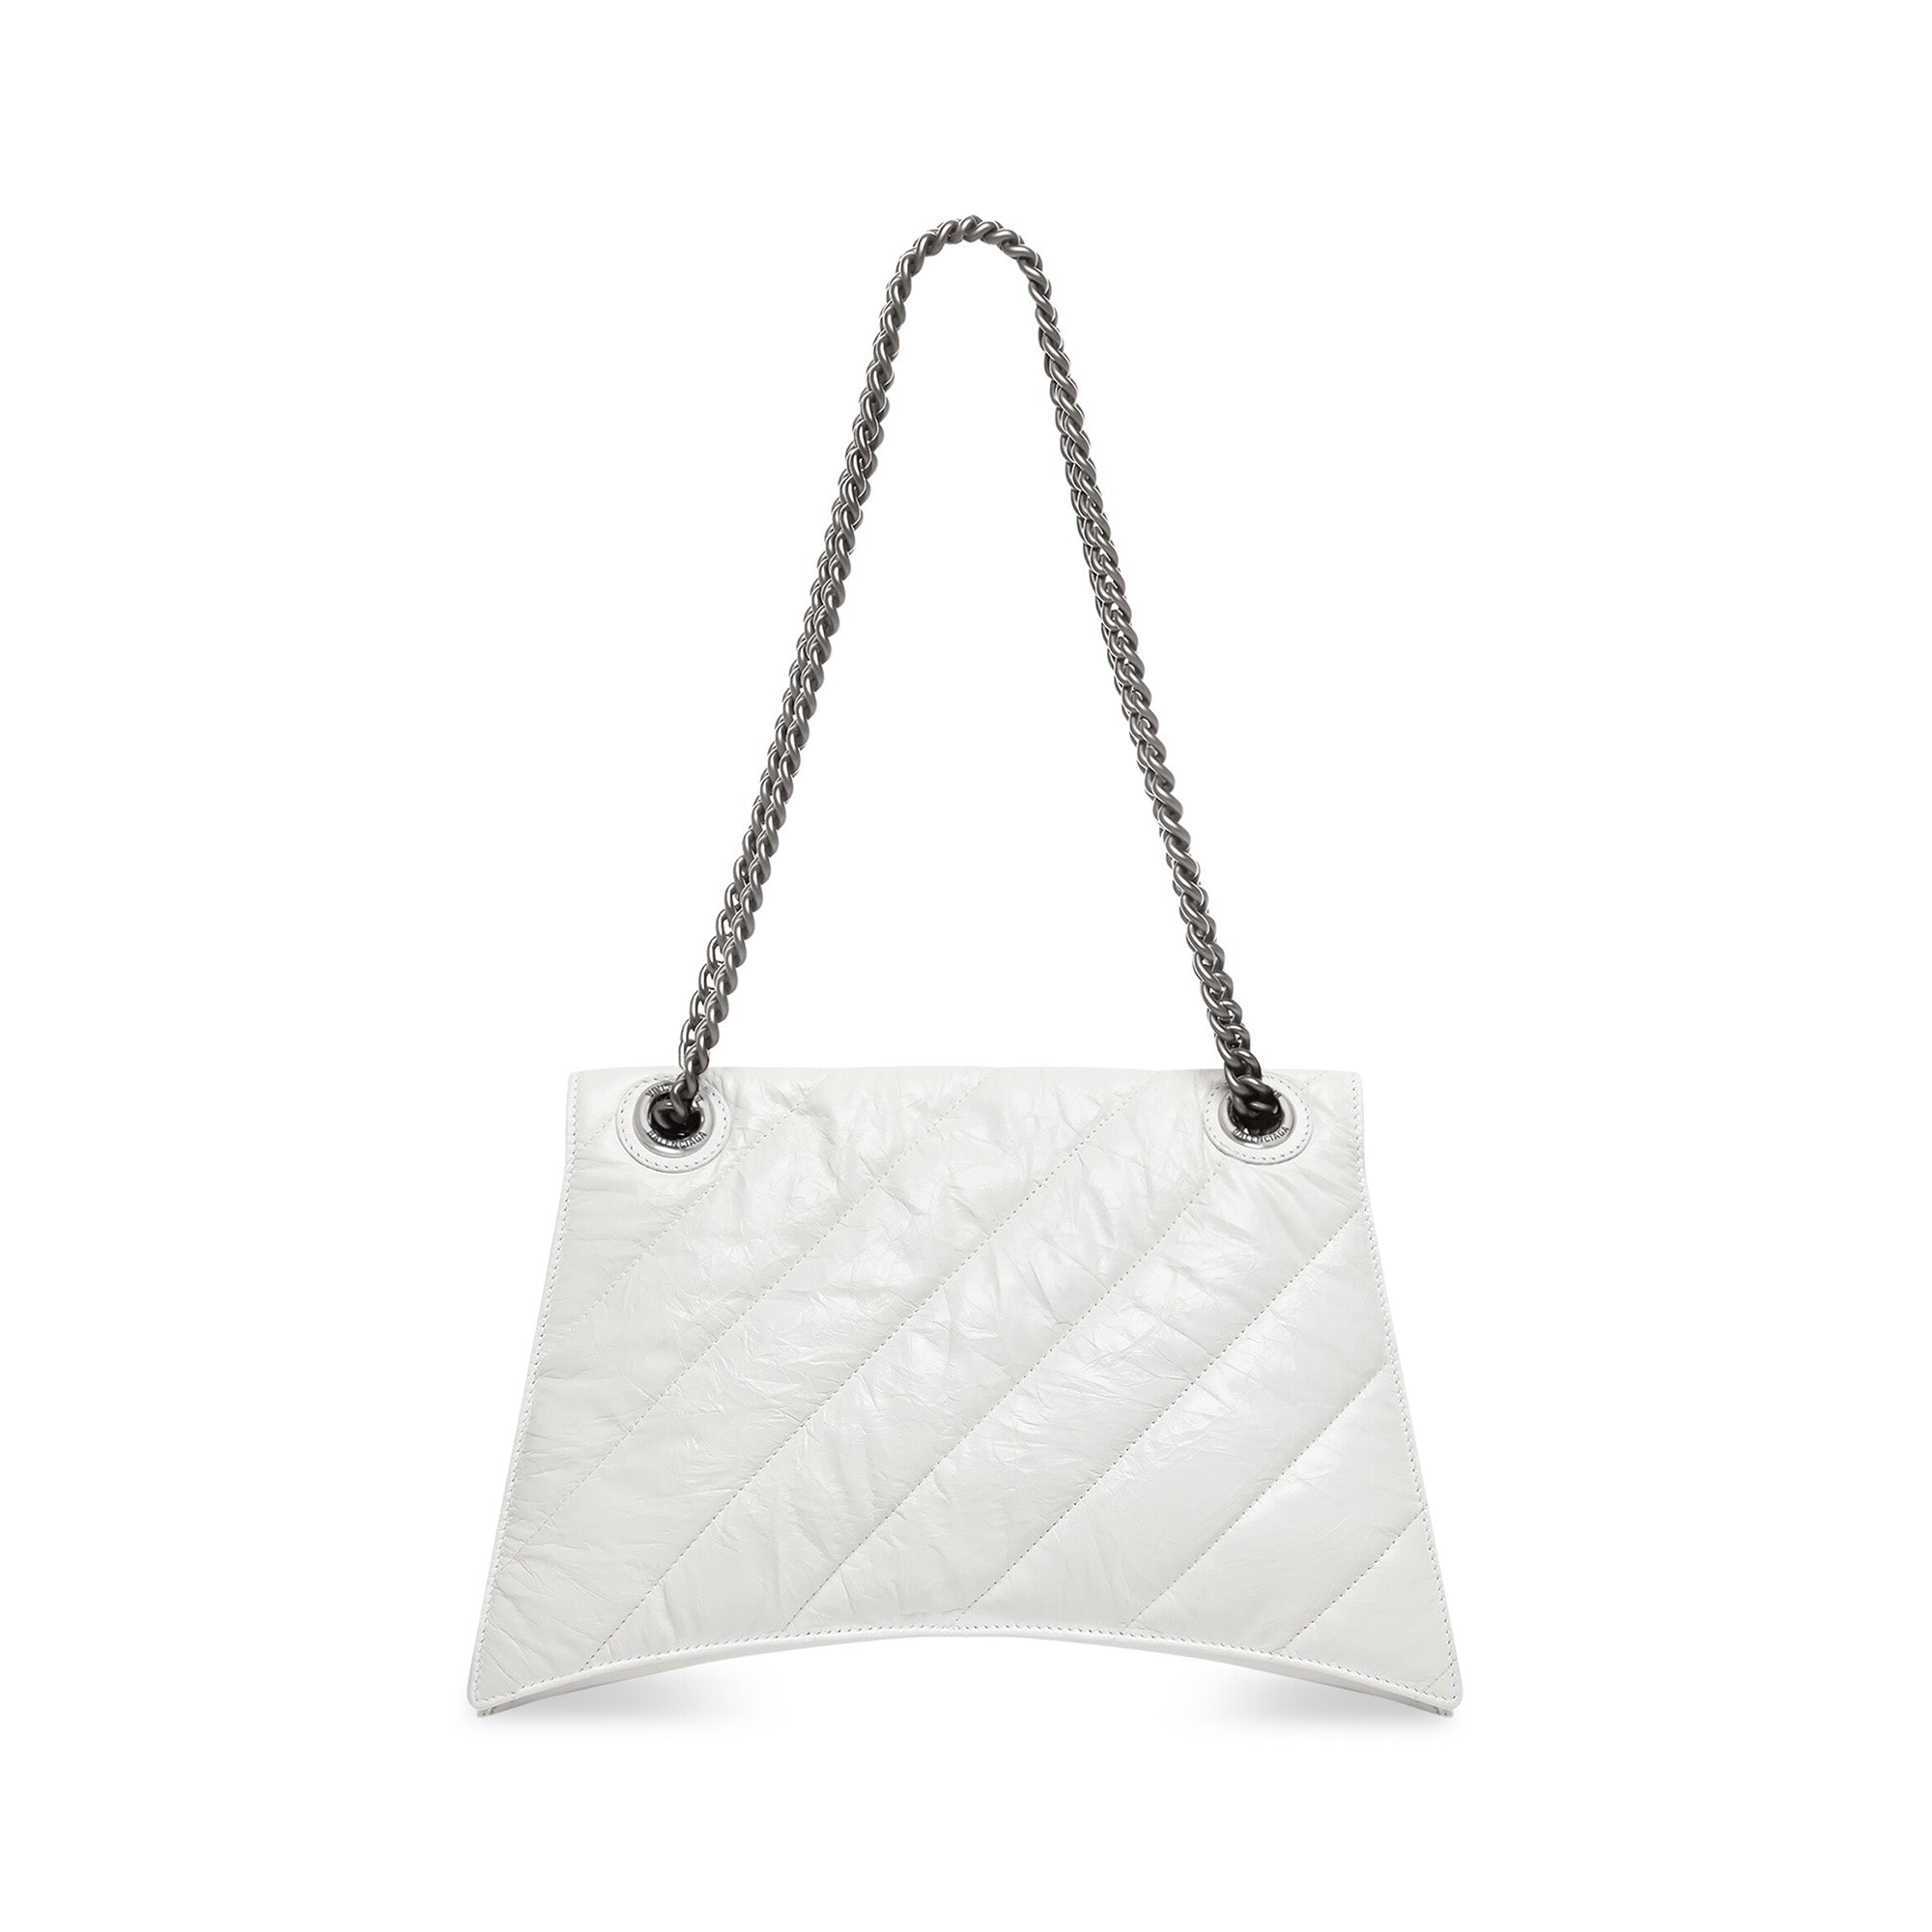 Balenciaga - Women’s Crush Quilted Chain Medium Bag - (Optic White) view 4